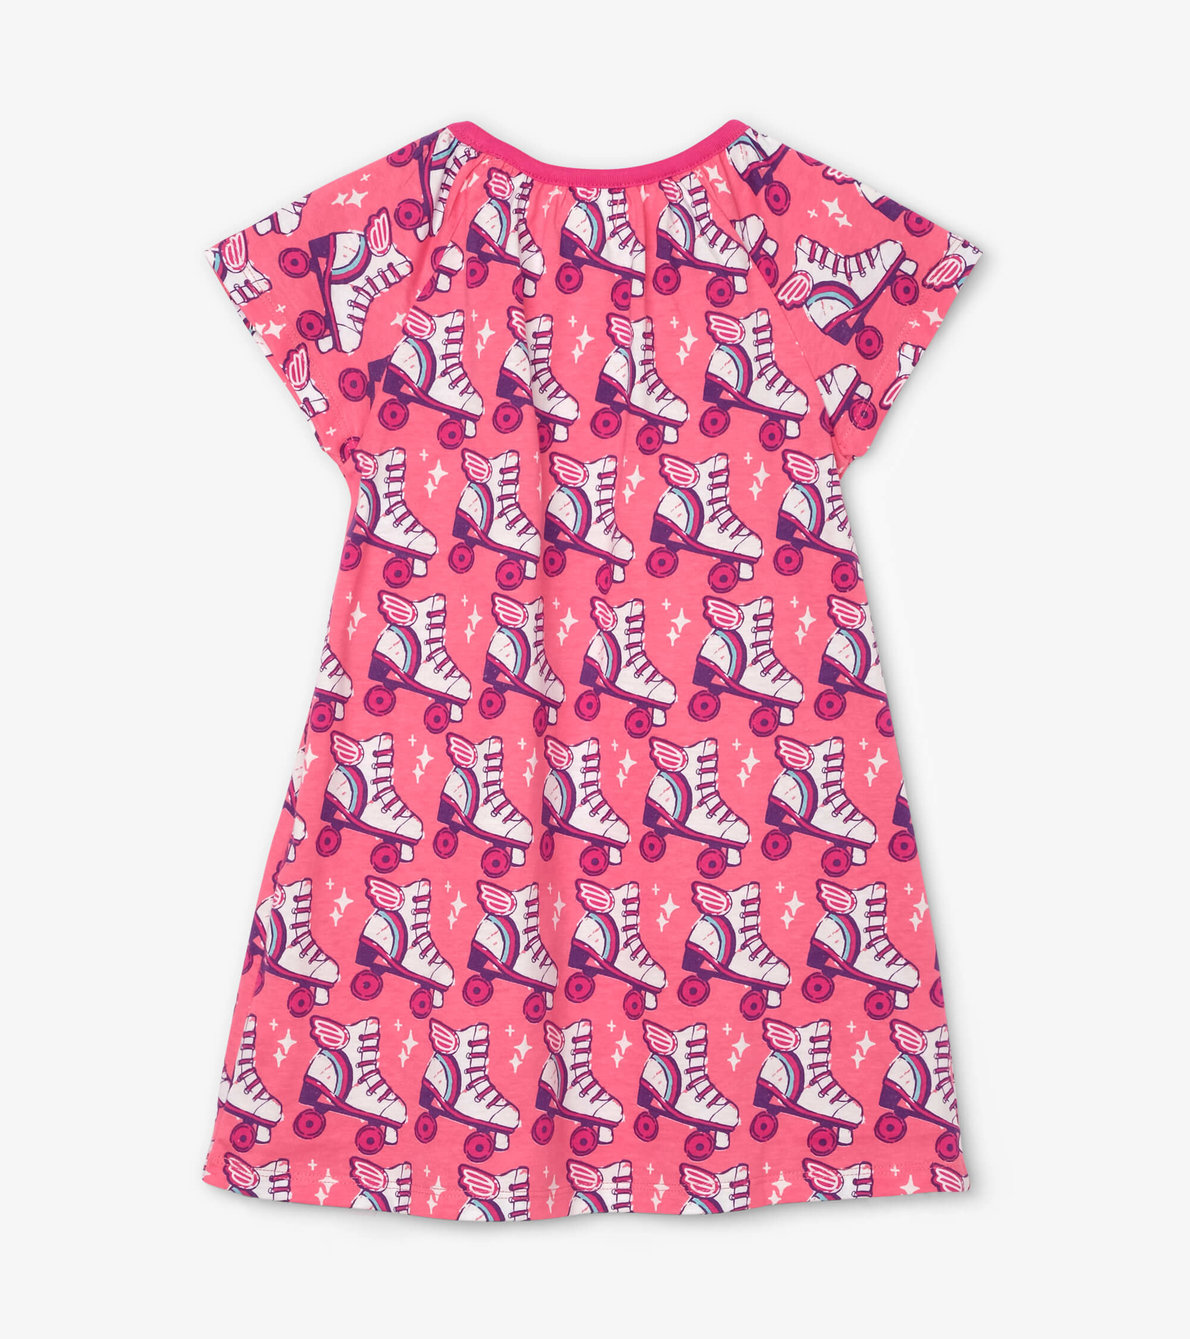 View larger image of Roller Girls Tee Shirt Dress